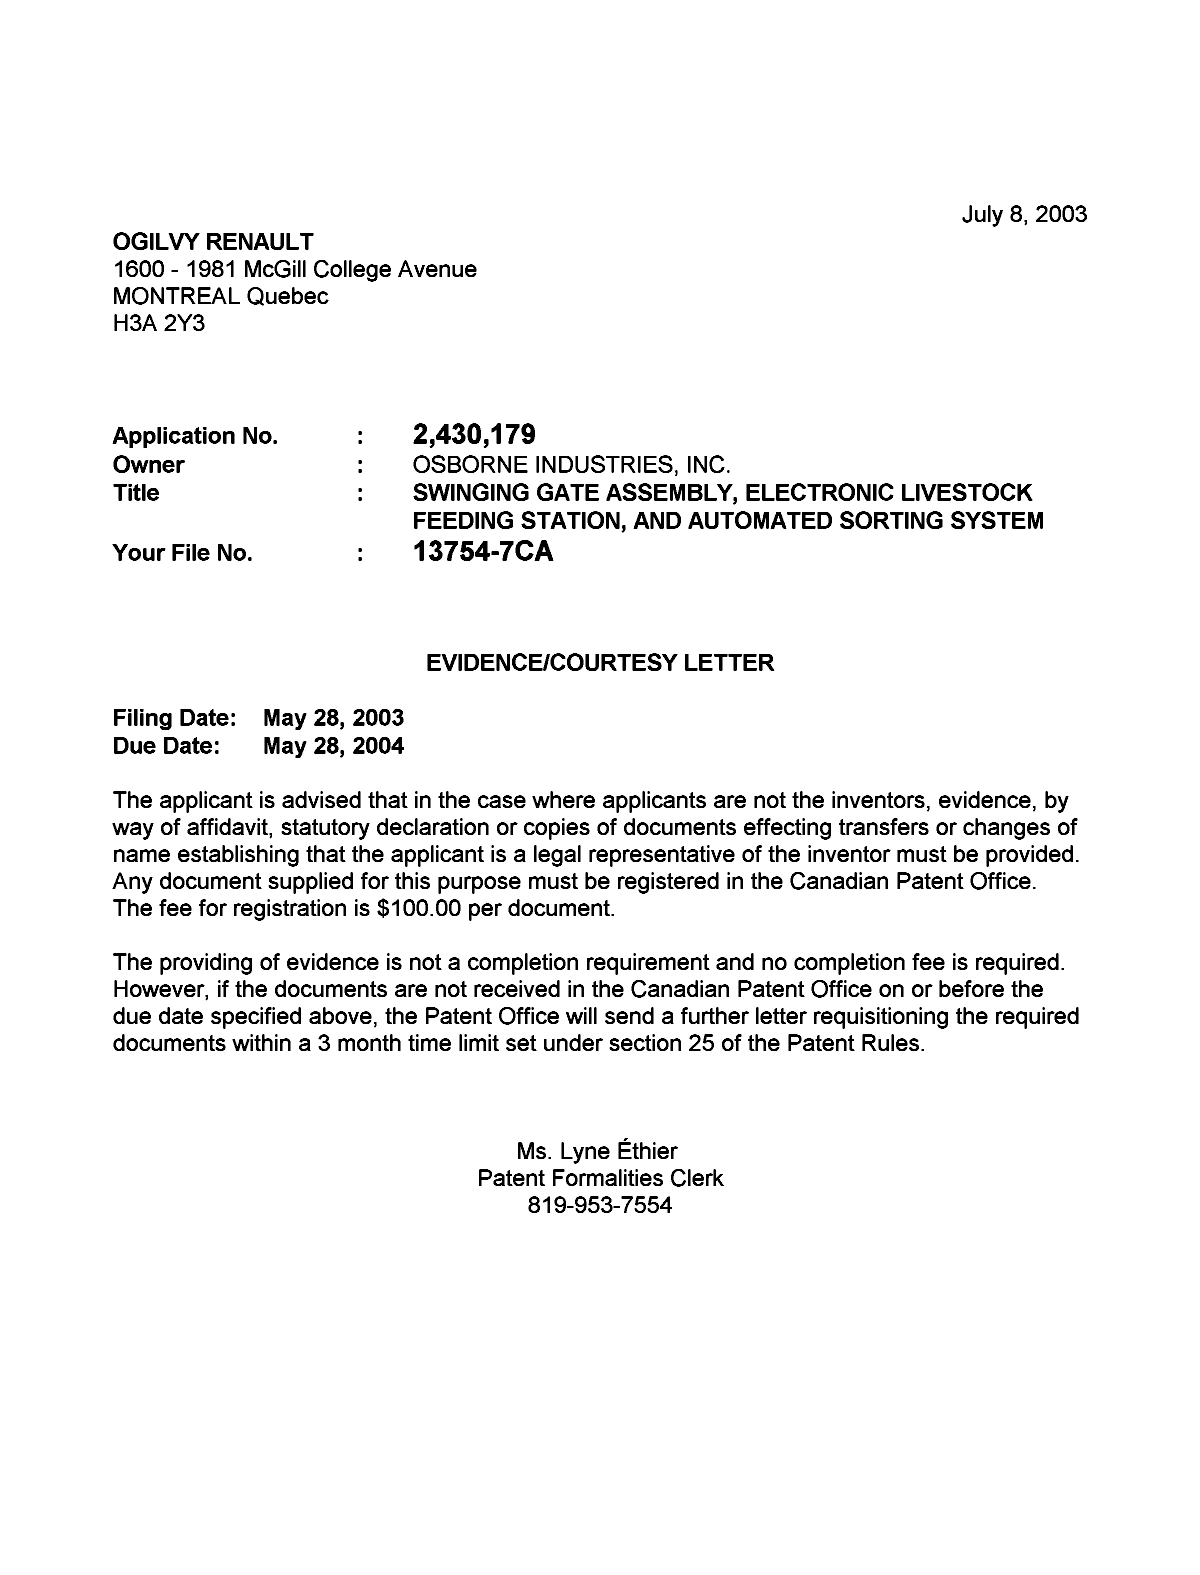 Canadian Patent Document 2430179. Correspondence 20030702. Image 1 of 1